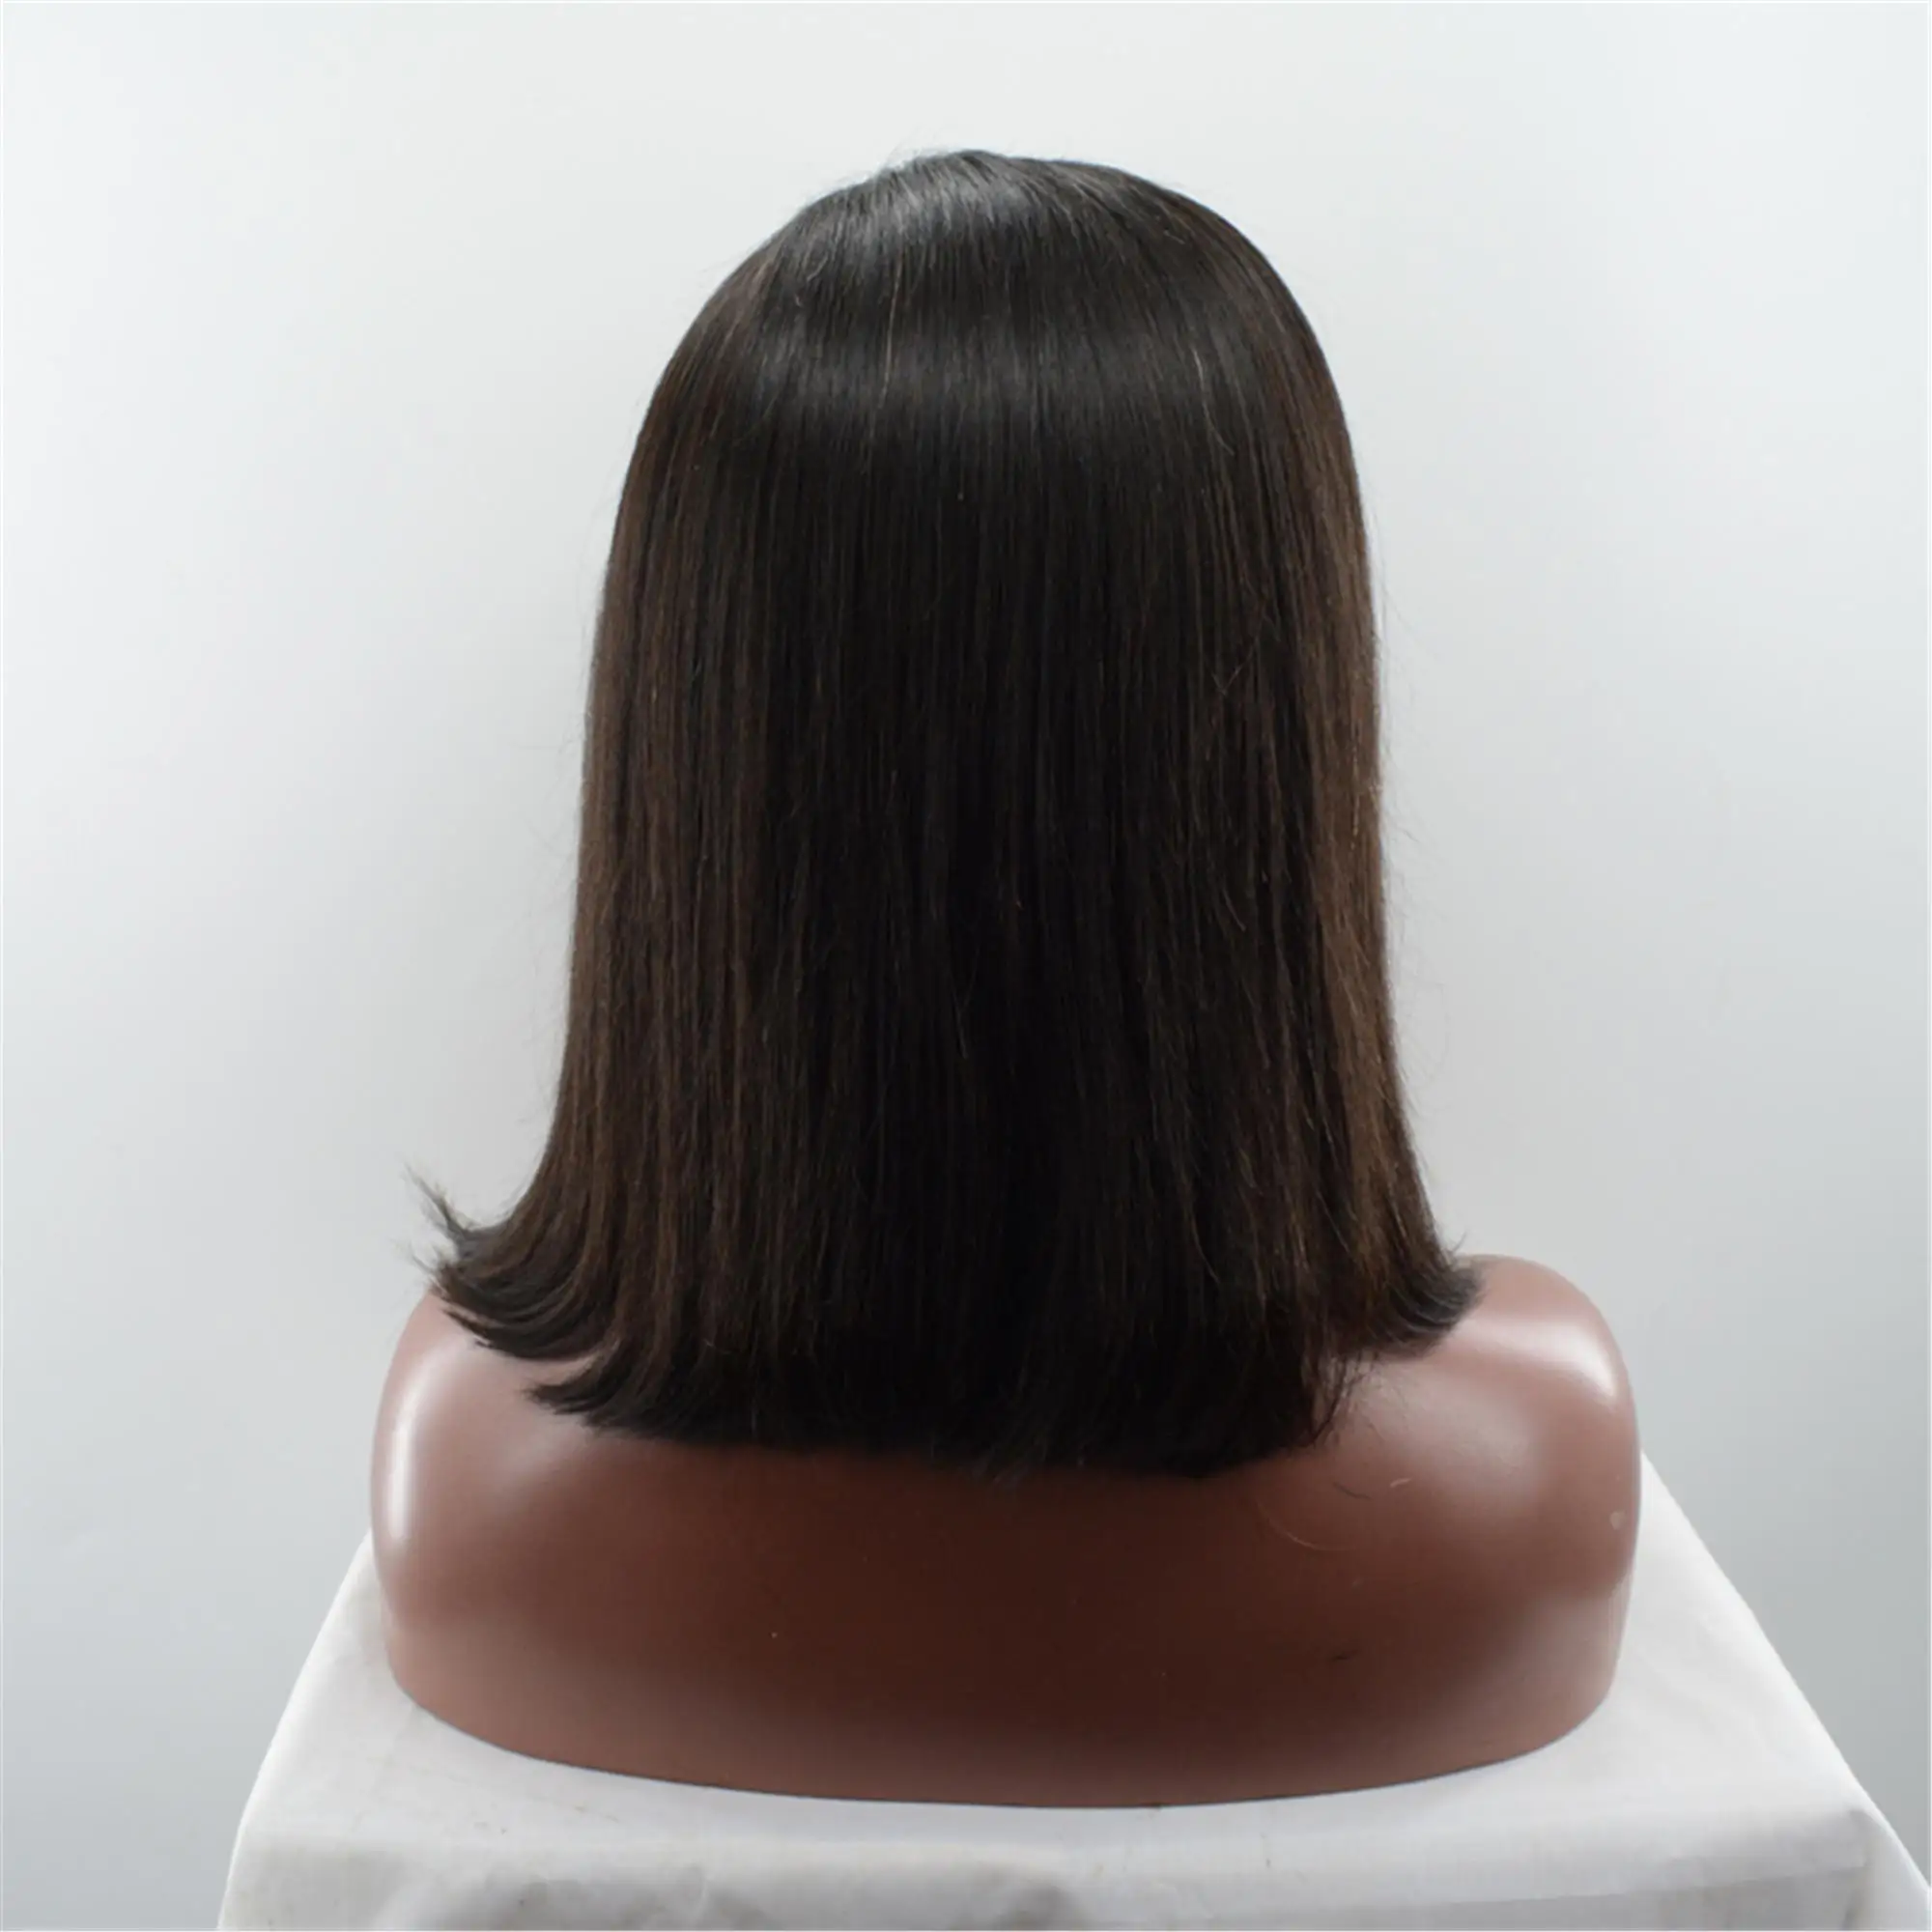 Brazilian Human Hair Wigs For Black Woman,Real Virgin Human Hair Wig